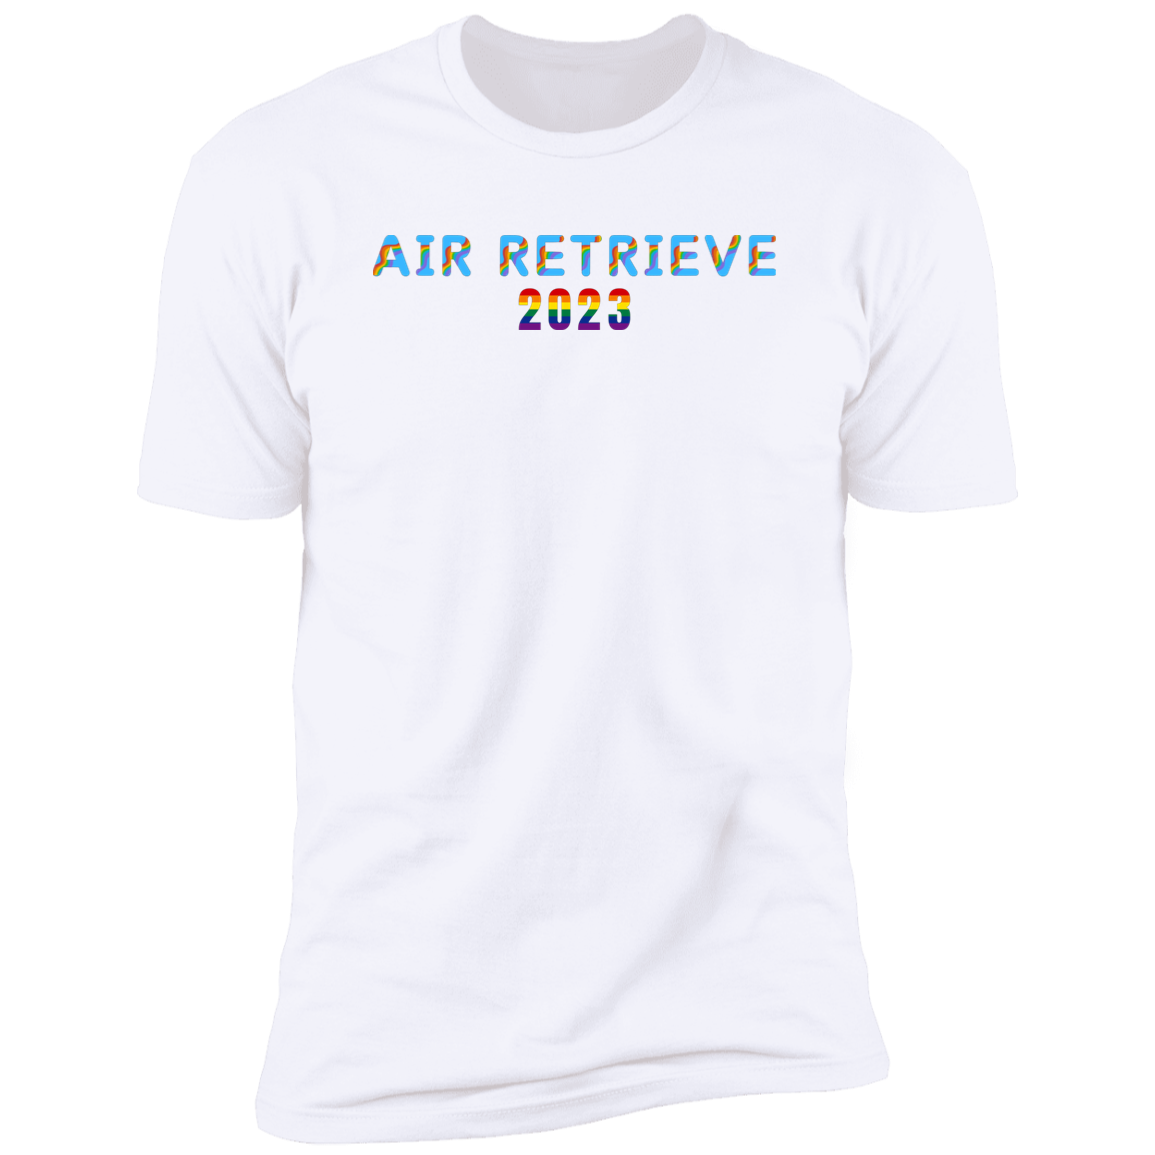 Air Retrieve 2023 Pride Dock diving t-shirt, dog pride air retrieve dock diving shirt for humans, in white